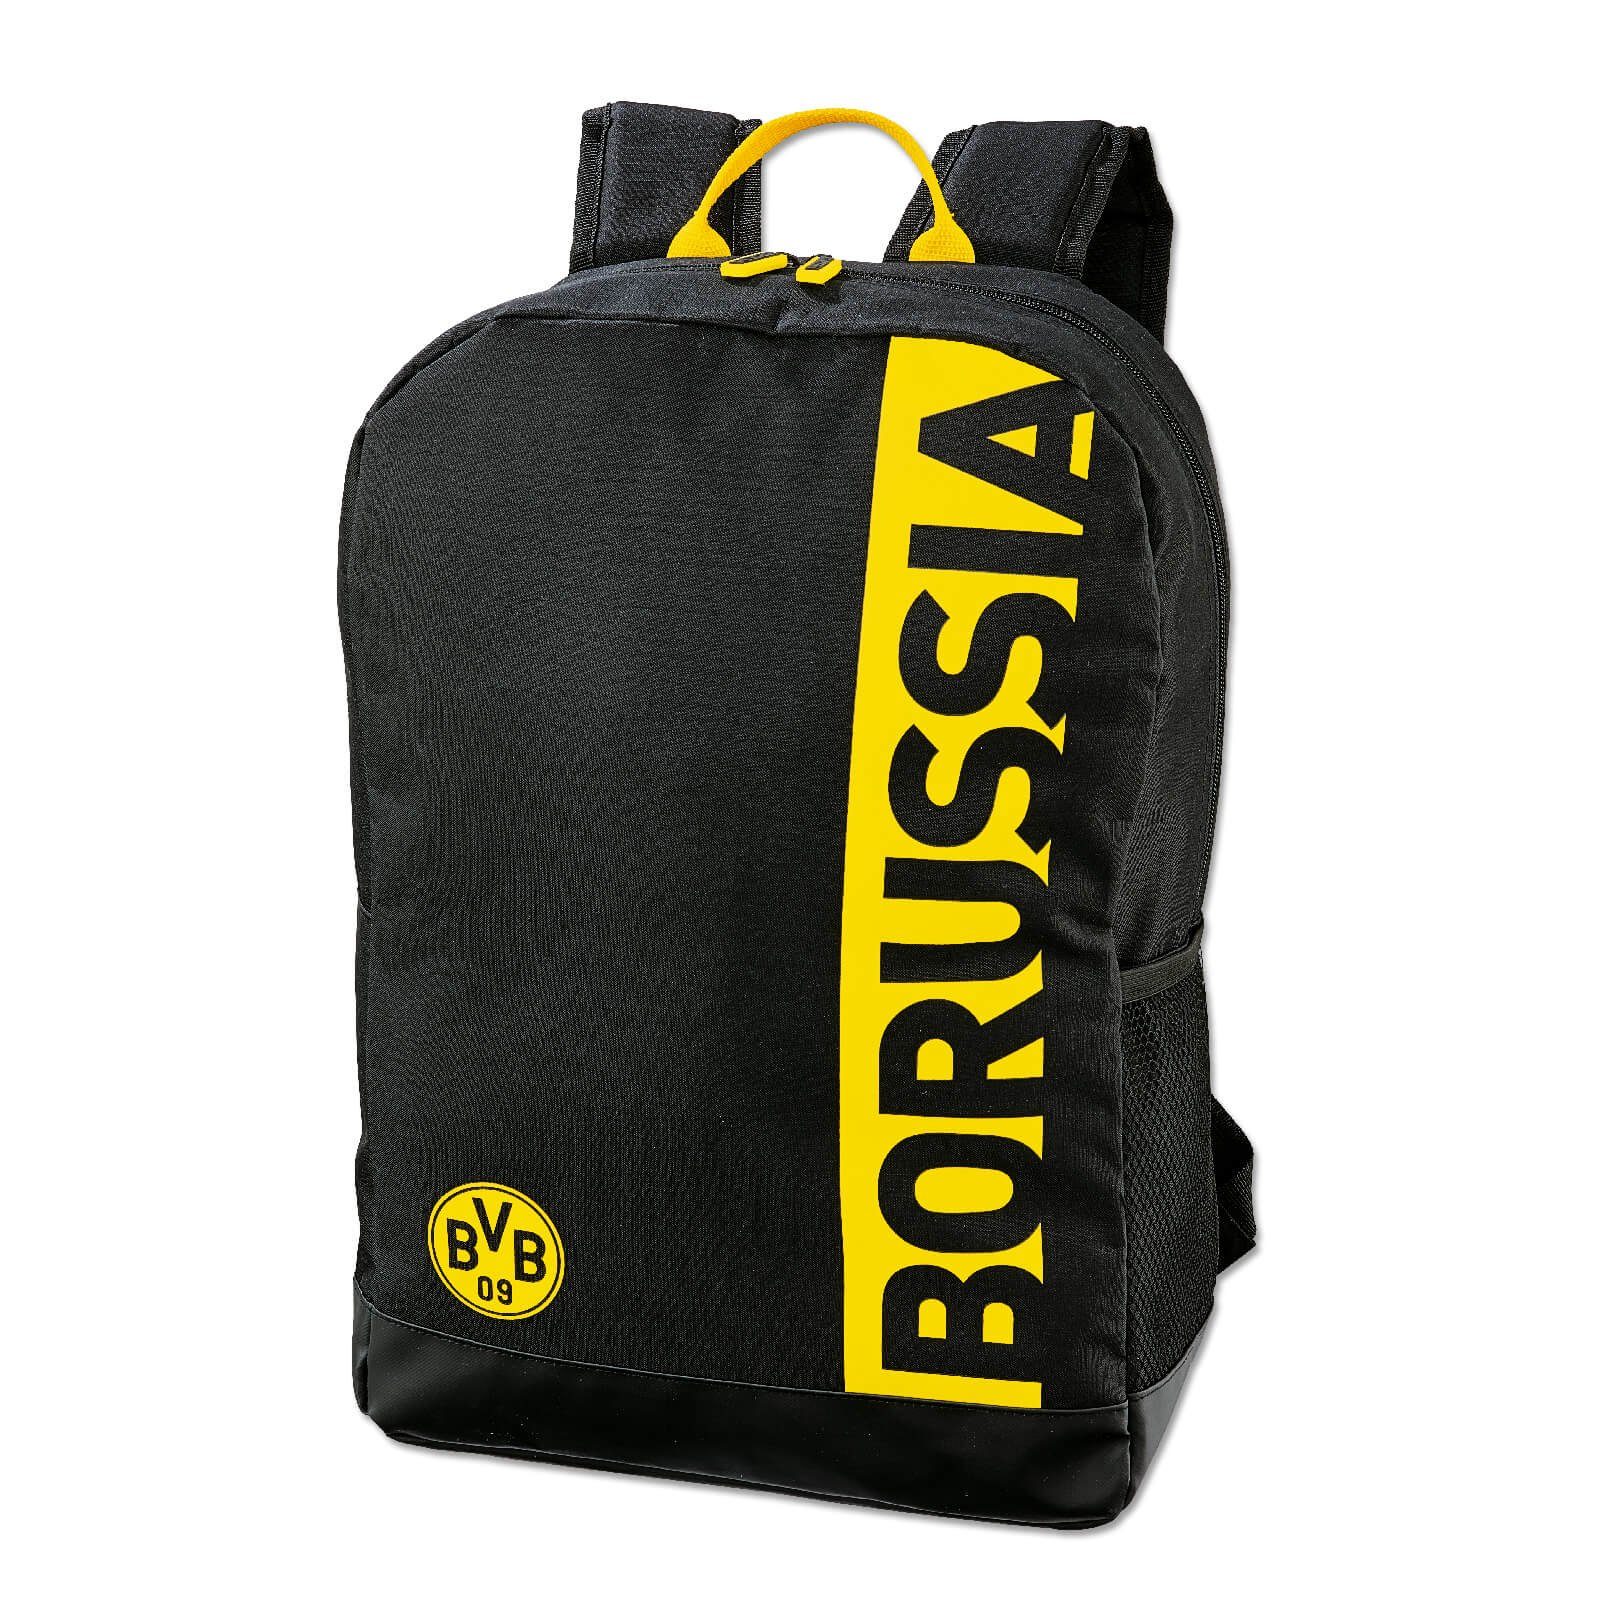 BVB Freizeitrucksack BORUSSIA-Rucksack (Packung) | Freizeitrucksäcke